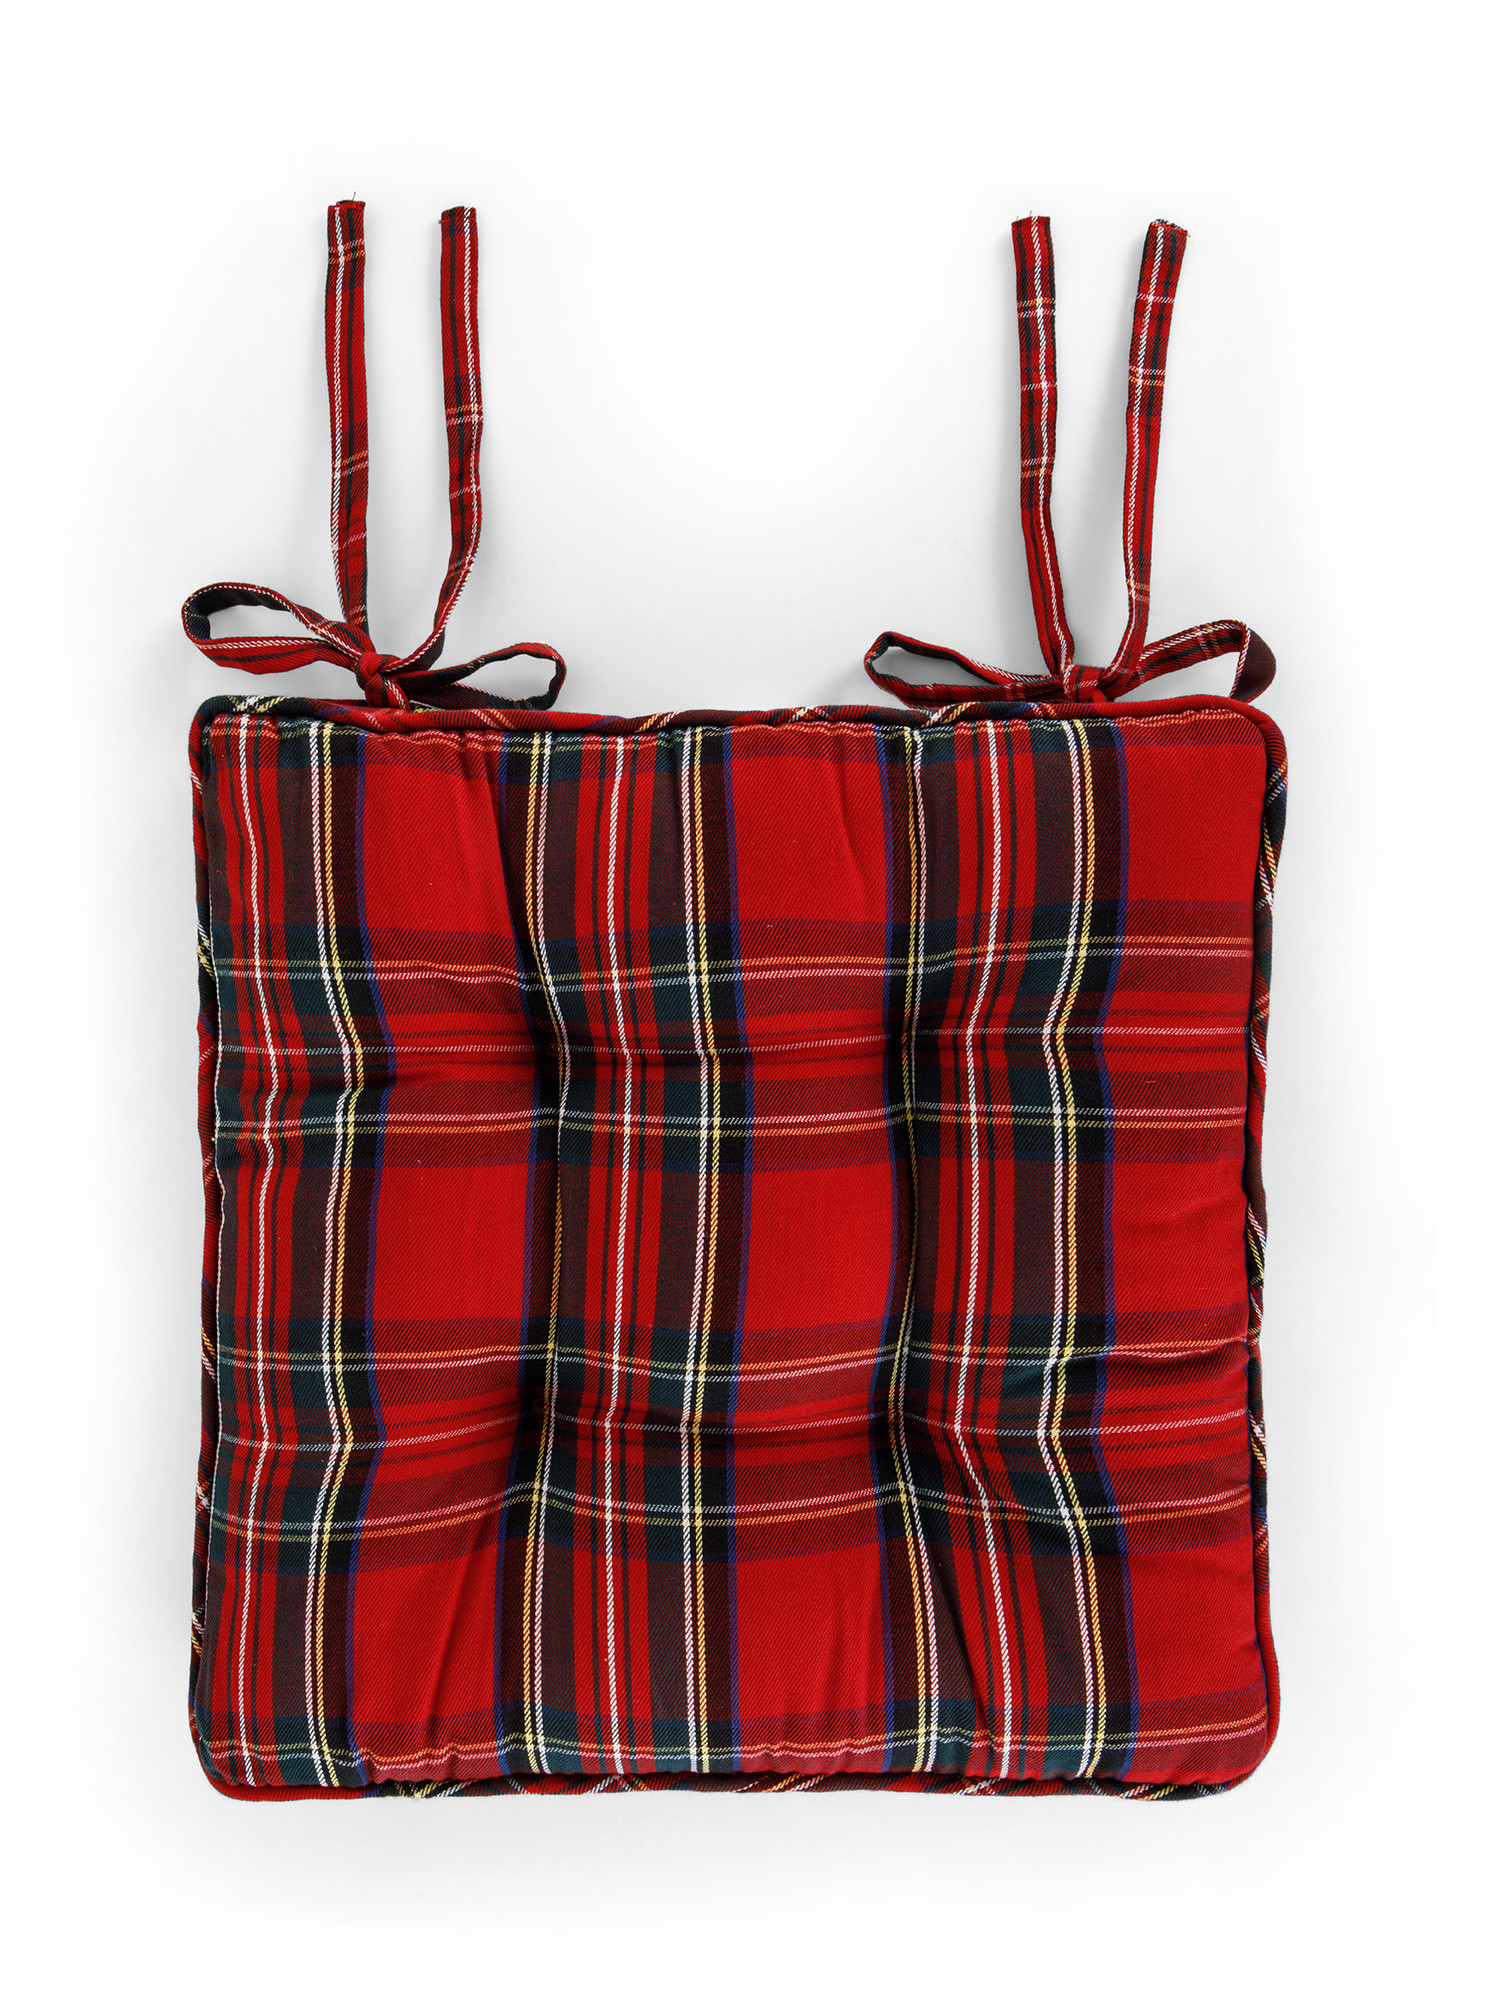 Tartan cotton twill seat cushion, Red, large image number 0